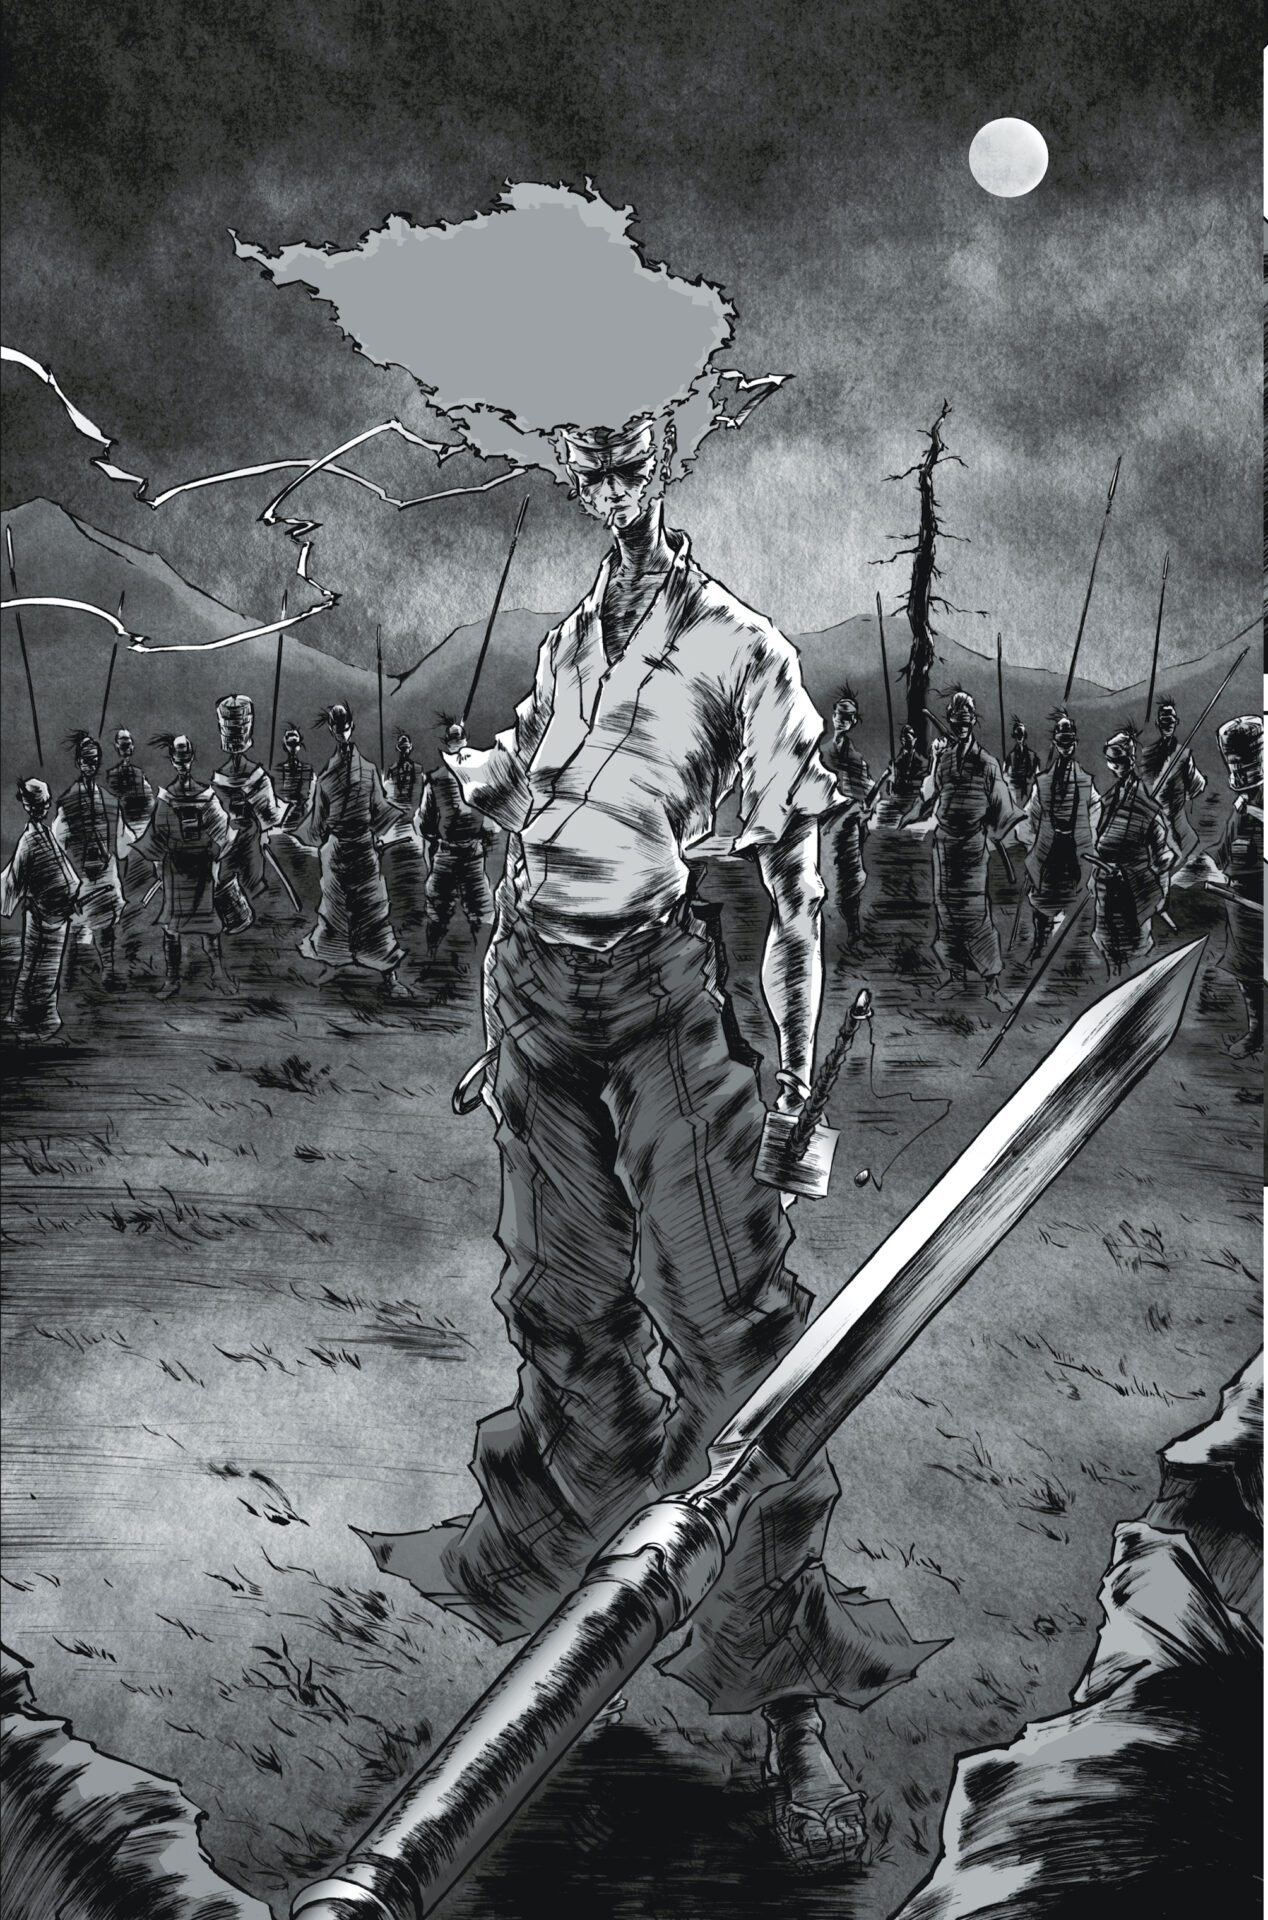 Afro Samurai Volume 1 Manga GN Uncut Director's Cut Takashi Okazaki New  Mint